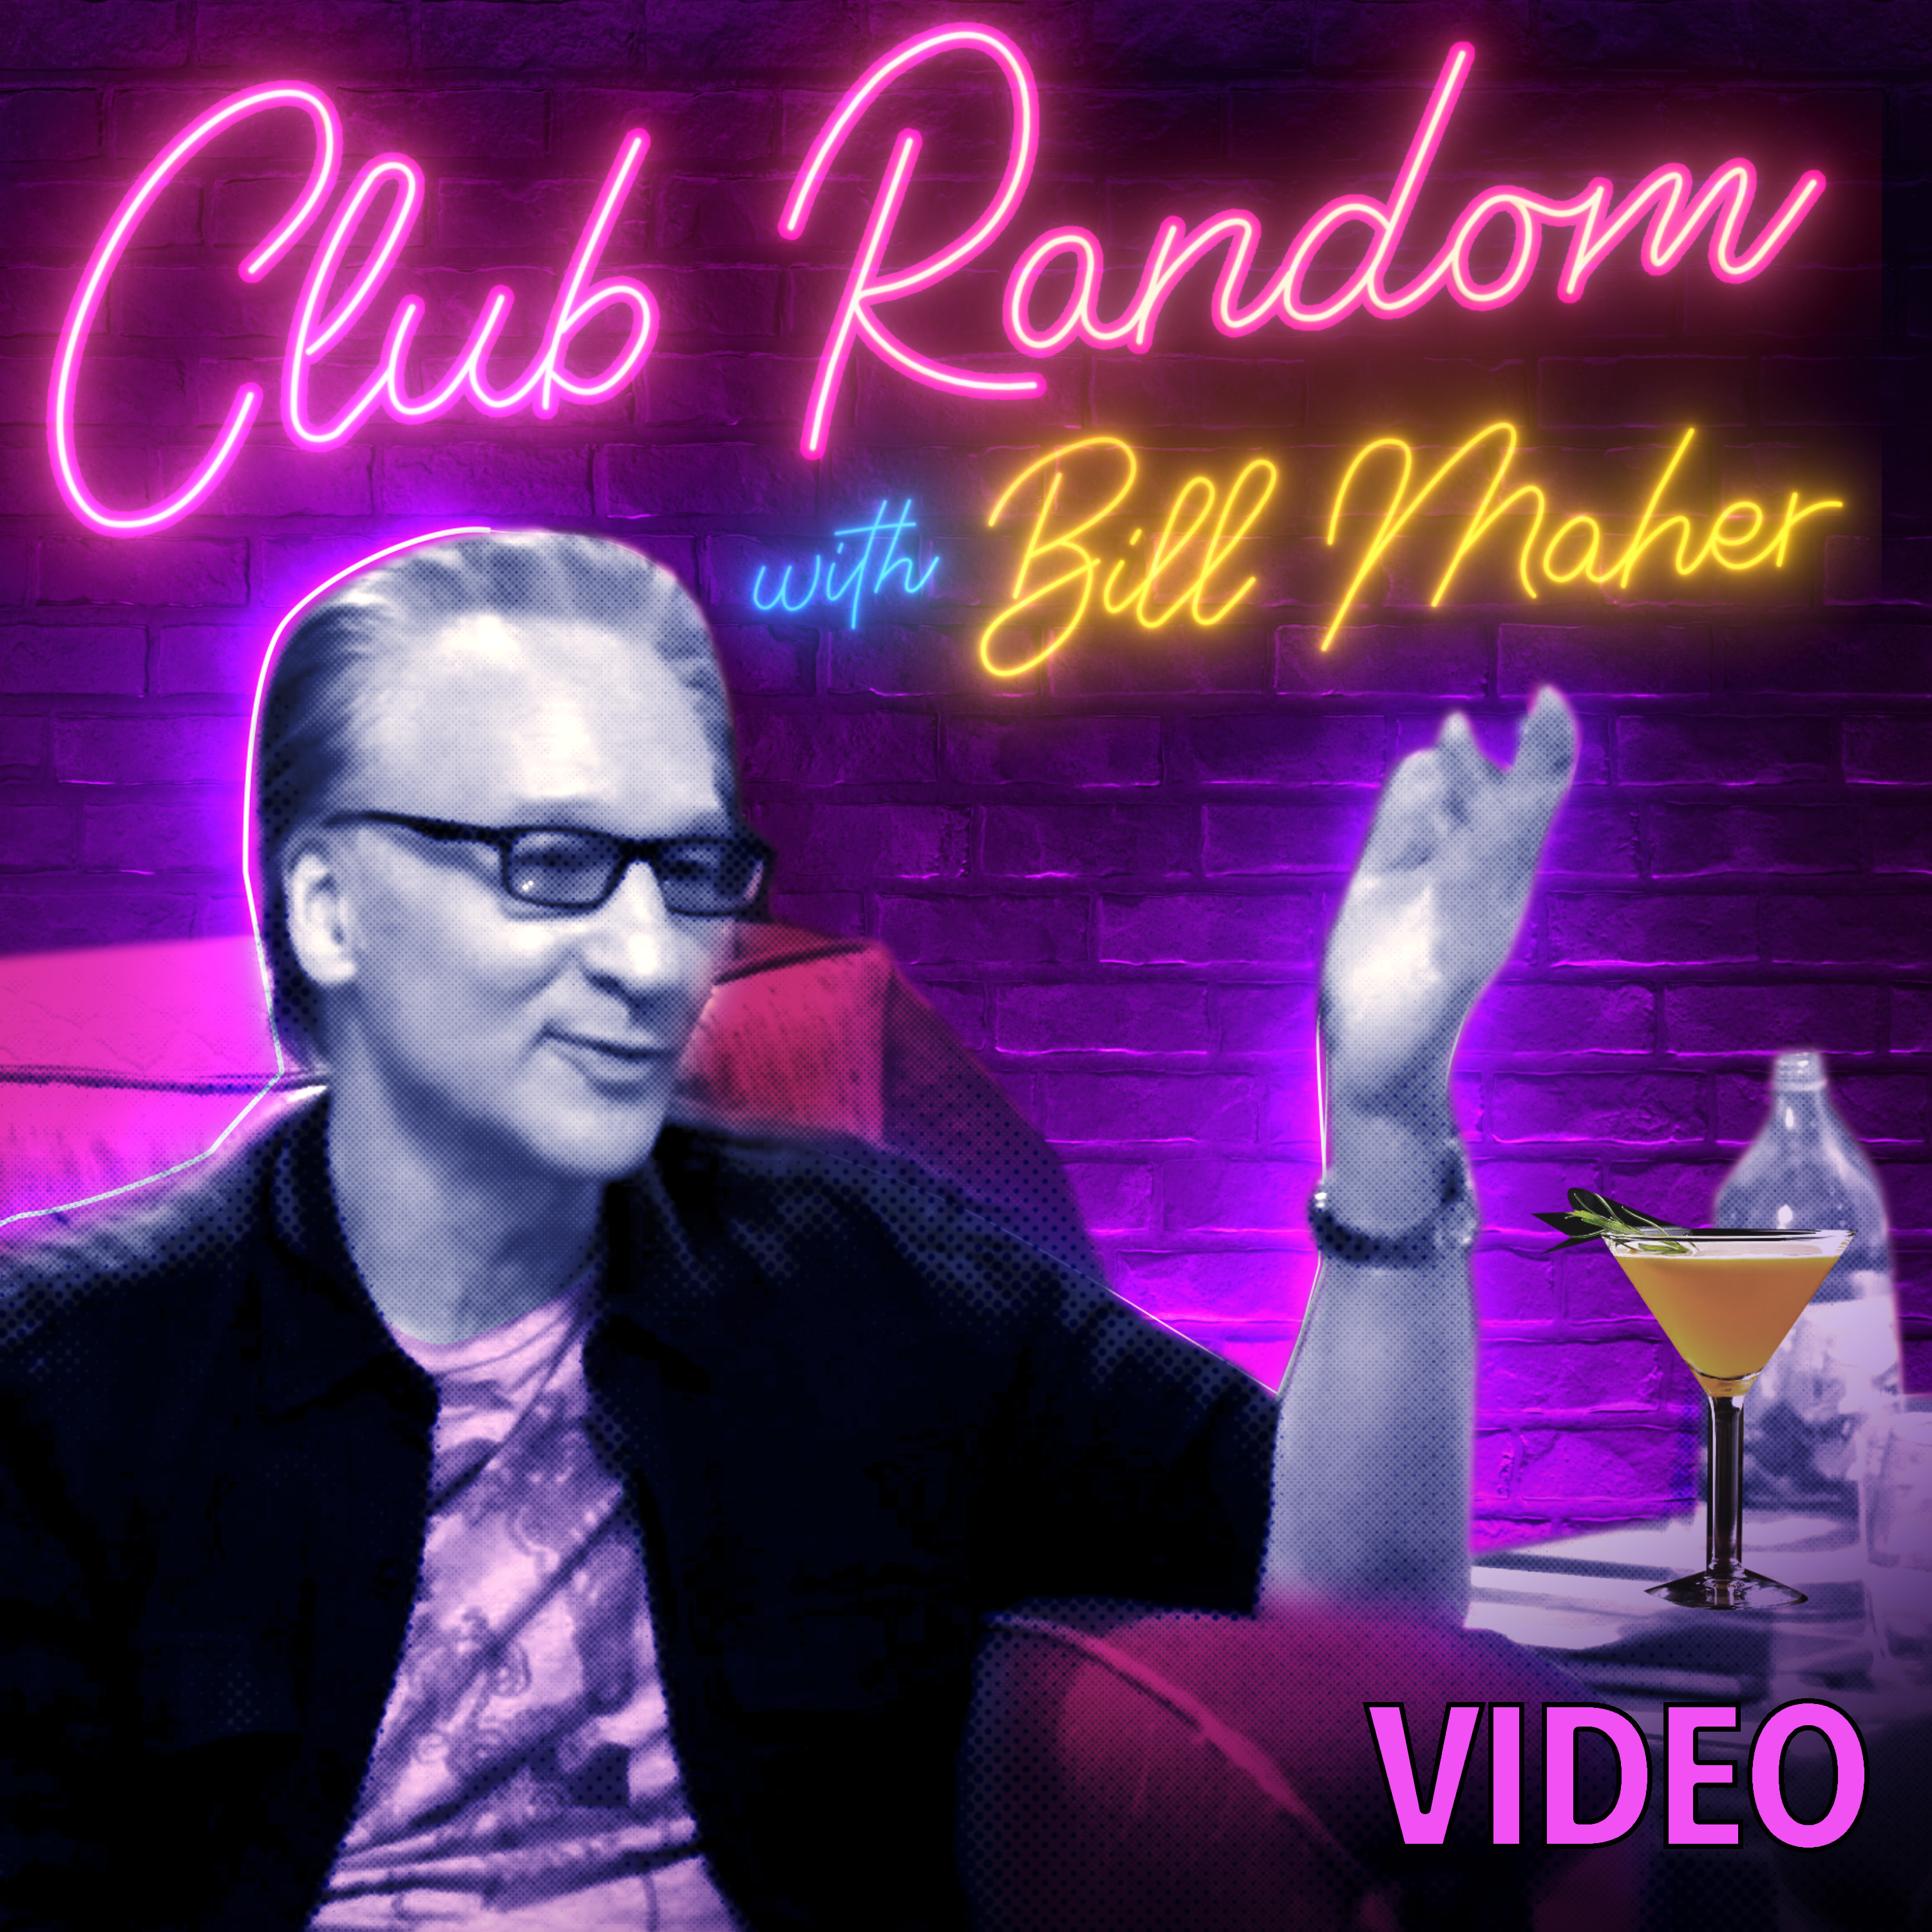 Video: Carrot Top | Club Random with Bill Maher